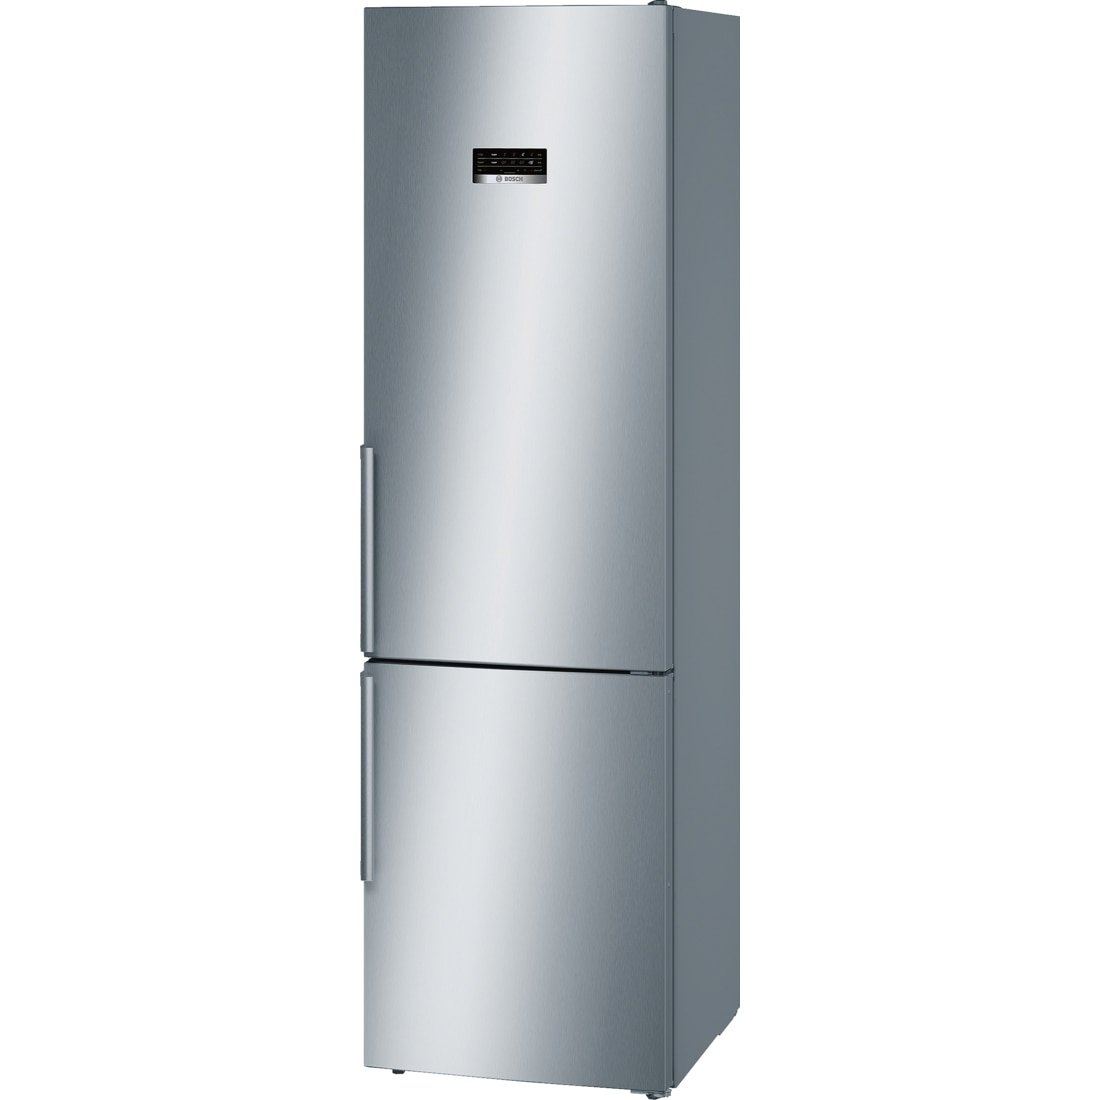 Хладилник Bosch KGN39XL35 с обем от 366 л.